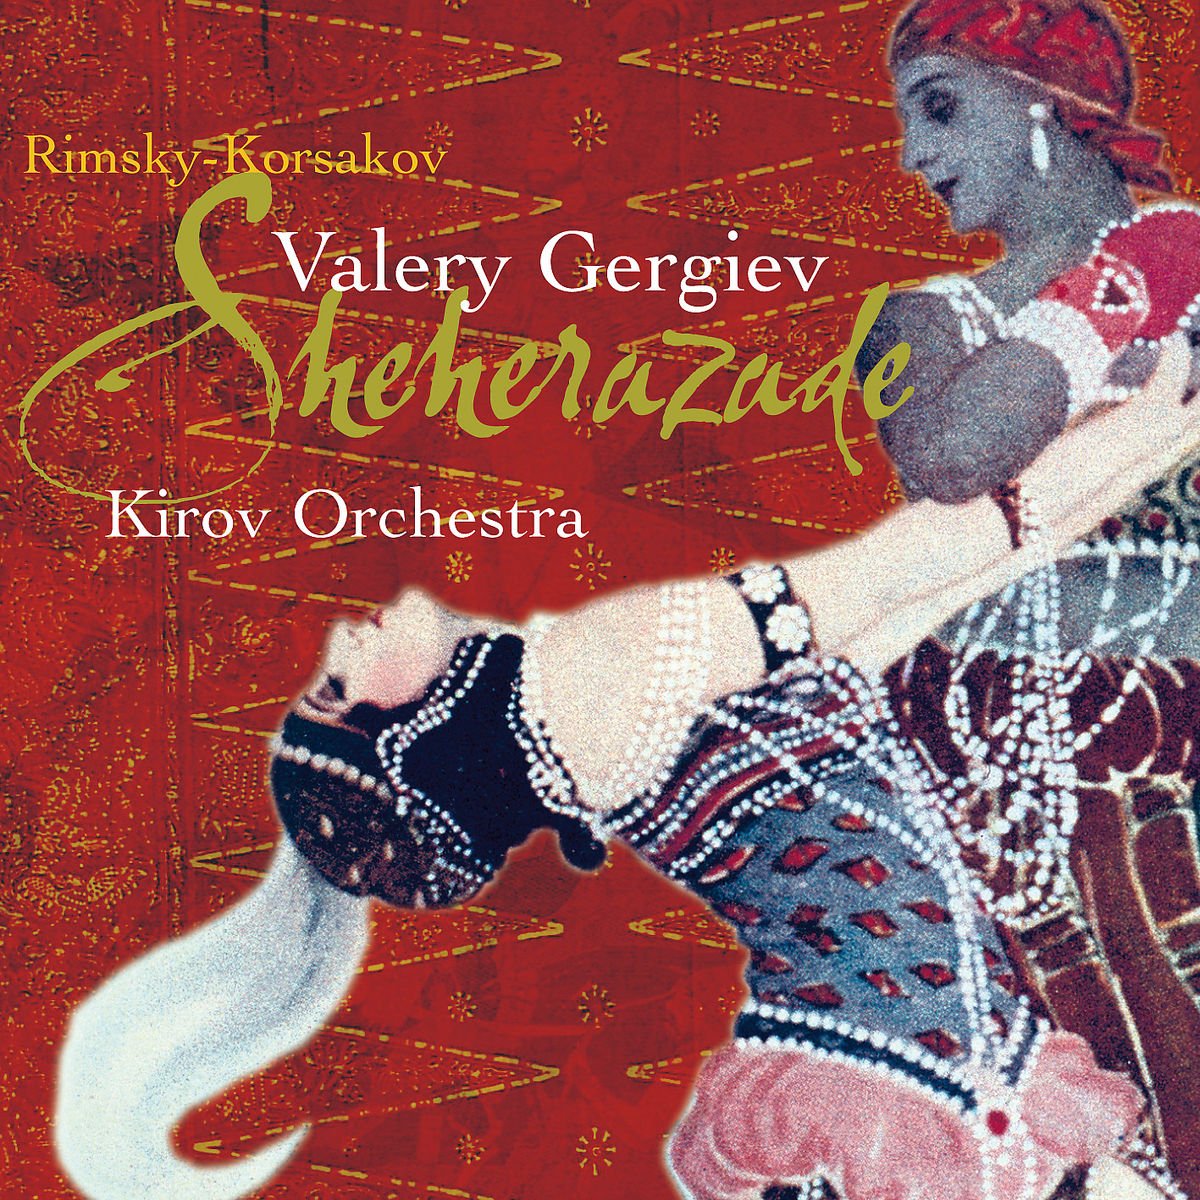 Rimsky-Korsakov:Schehrazade